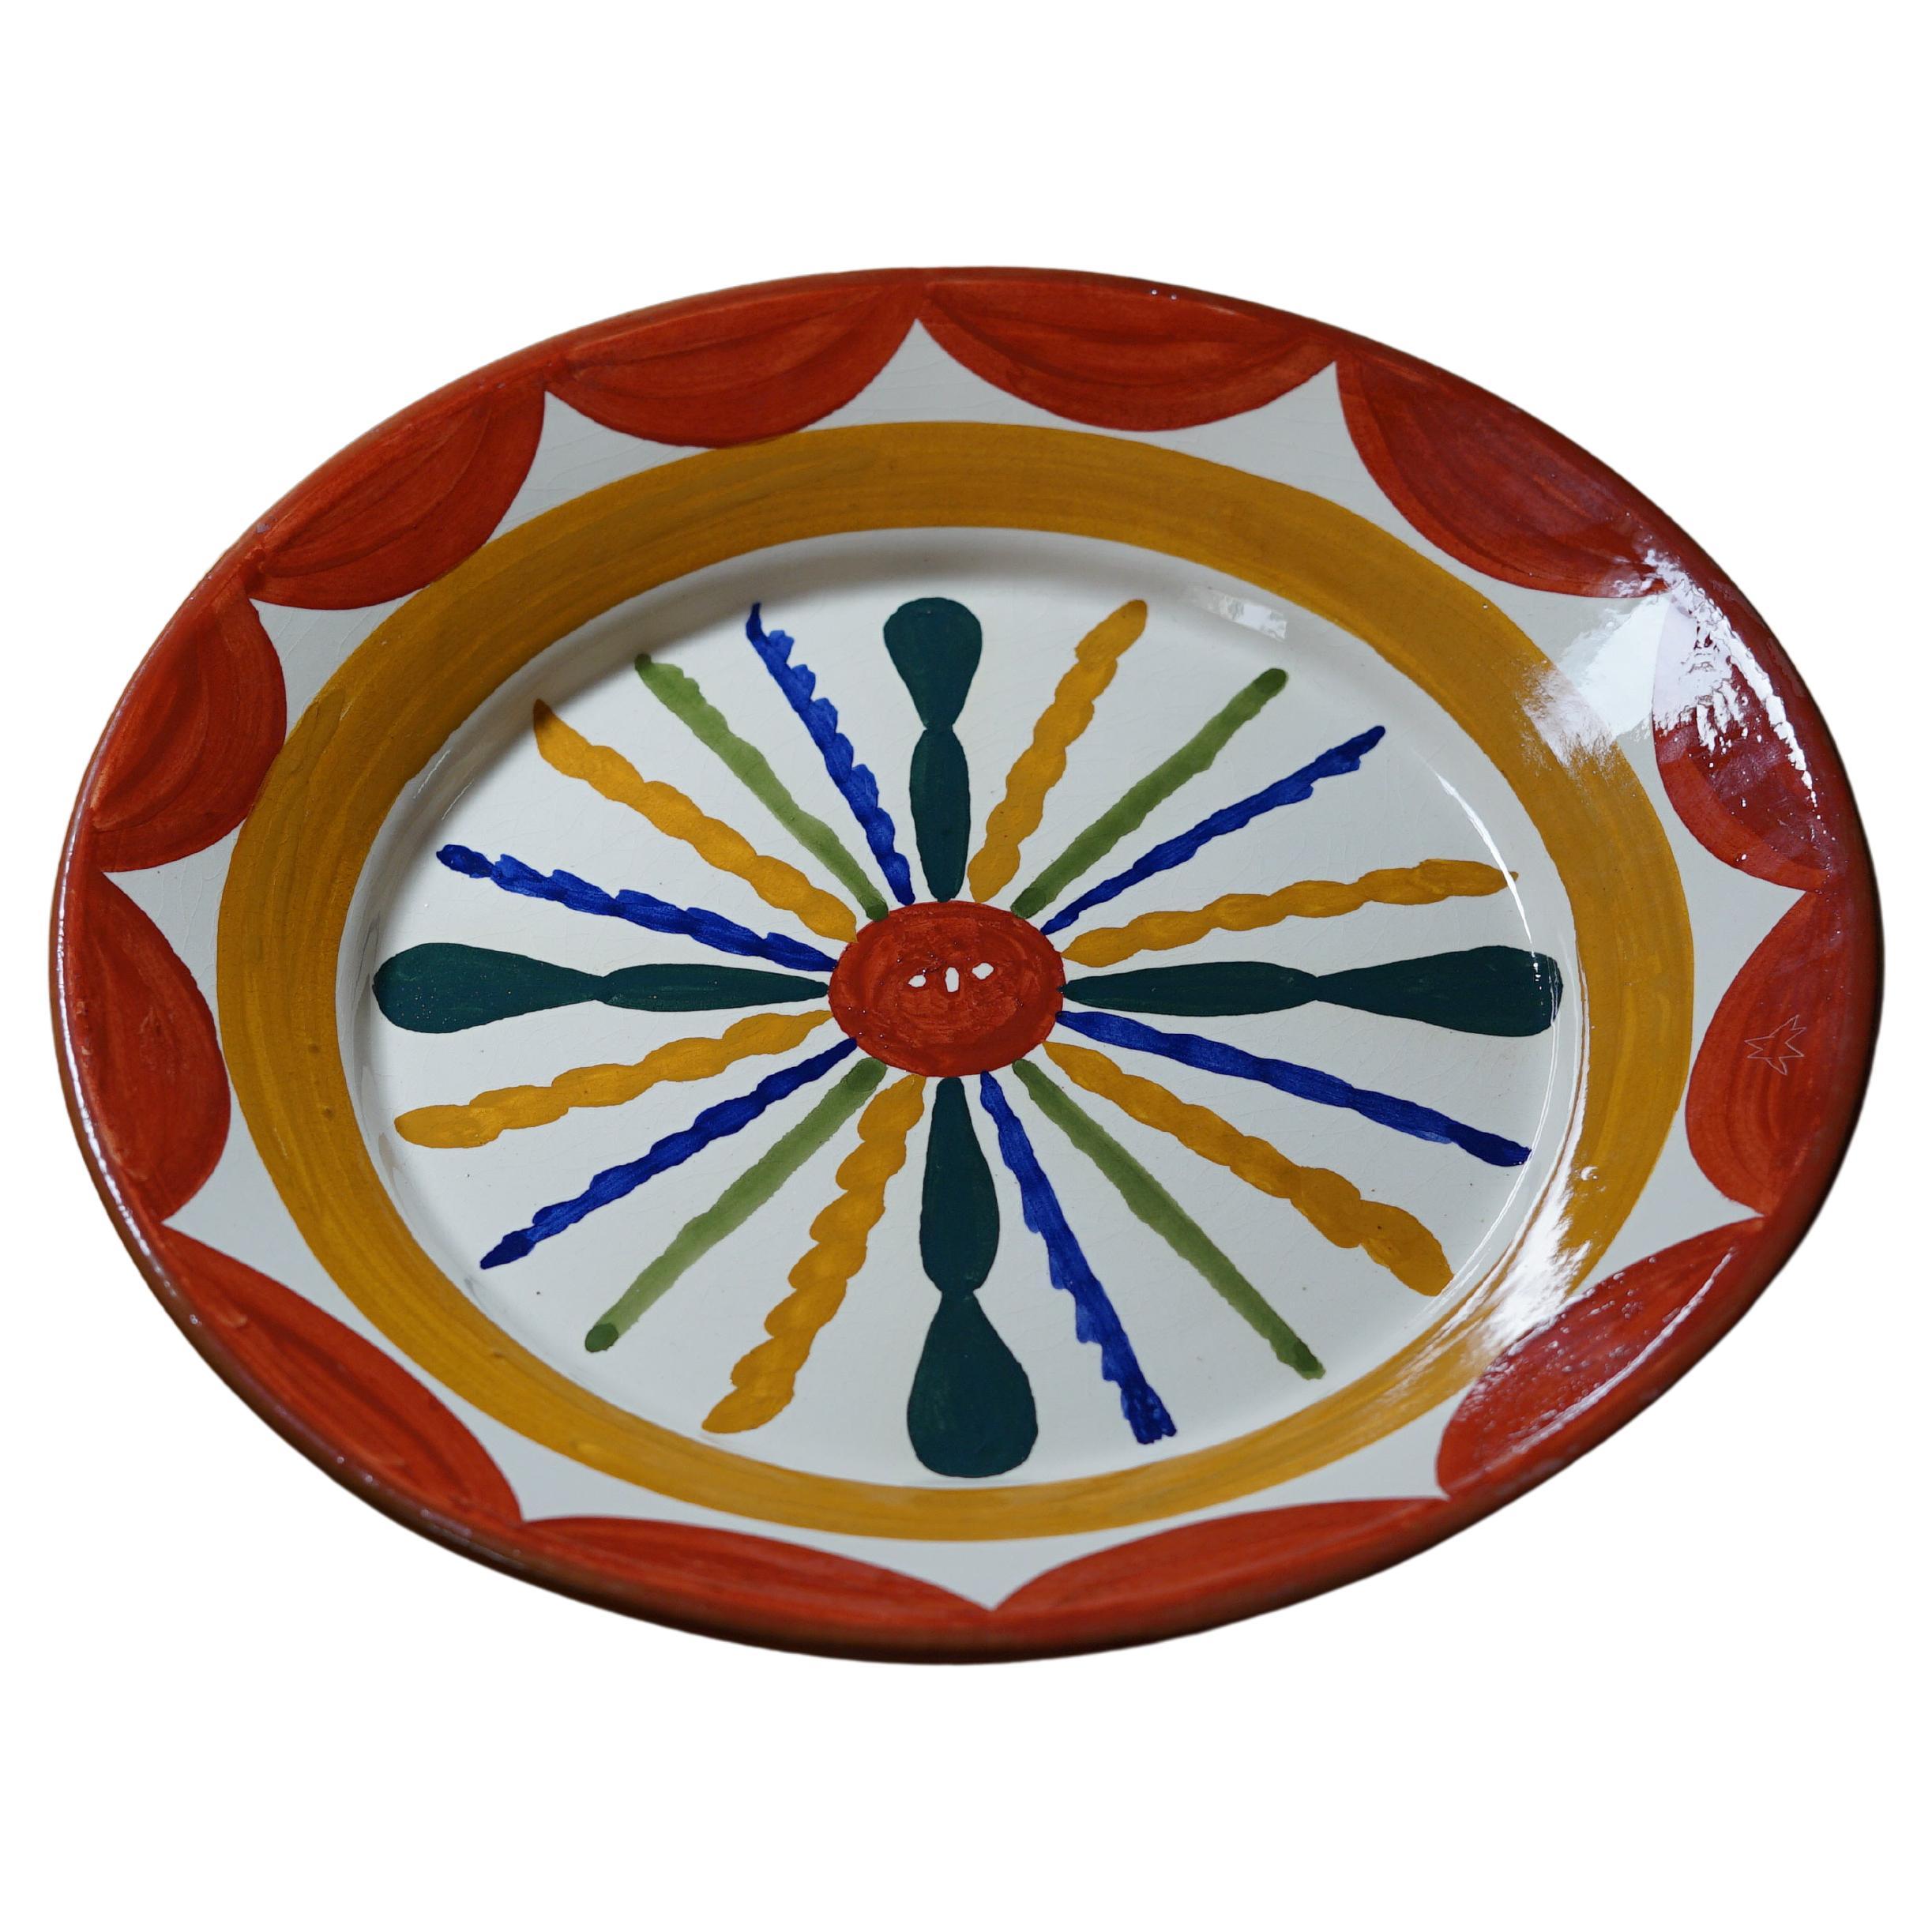 TASCO presents Solarengo - Terracotta Plate Handpainted by Mariana Malhão For Sale